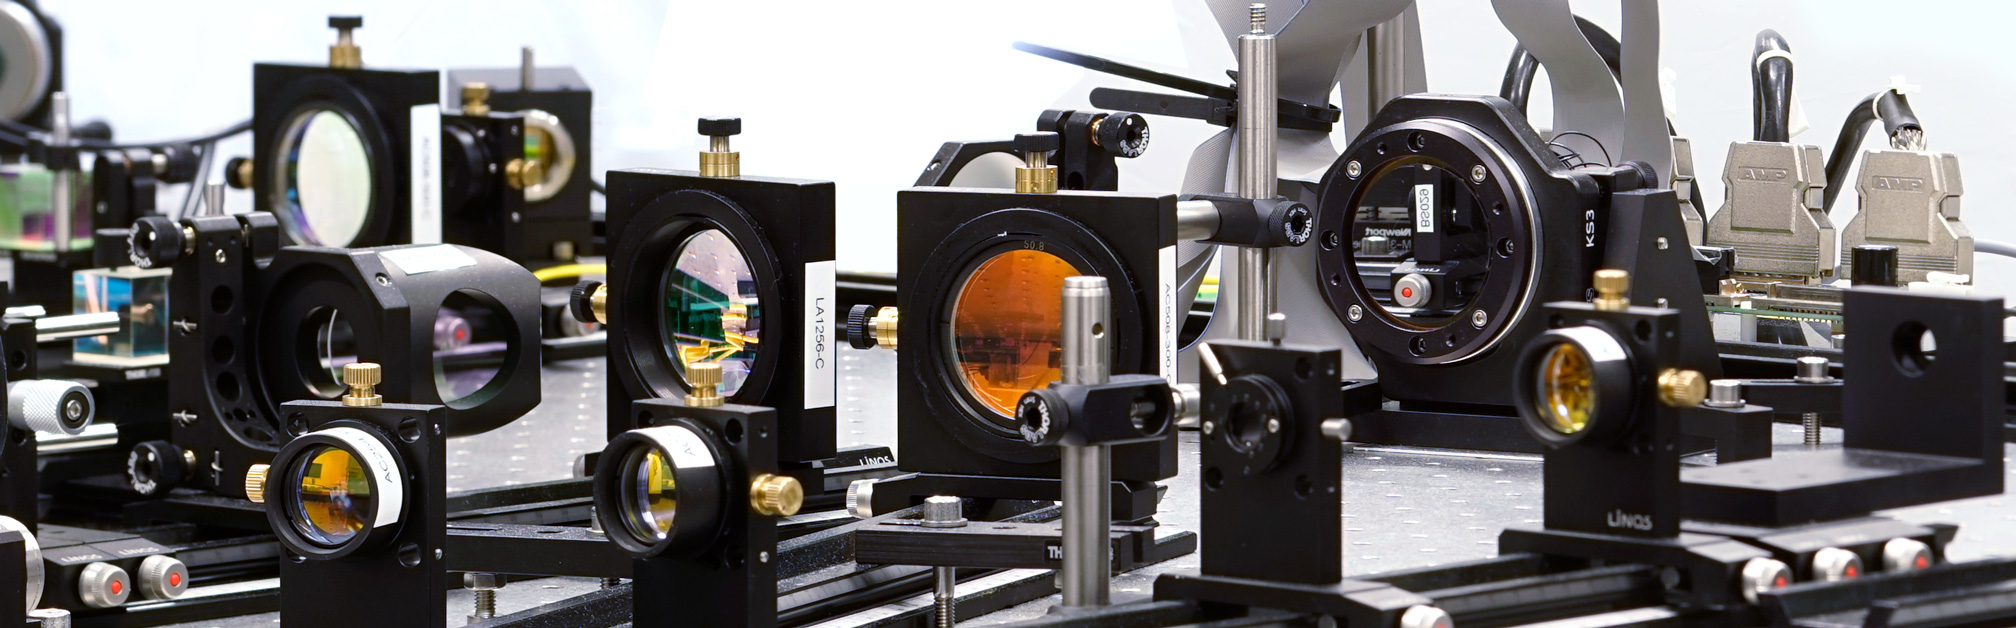 Laboratory set-up of a developed adaptive optical system at Fraunhofer IOF.